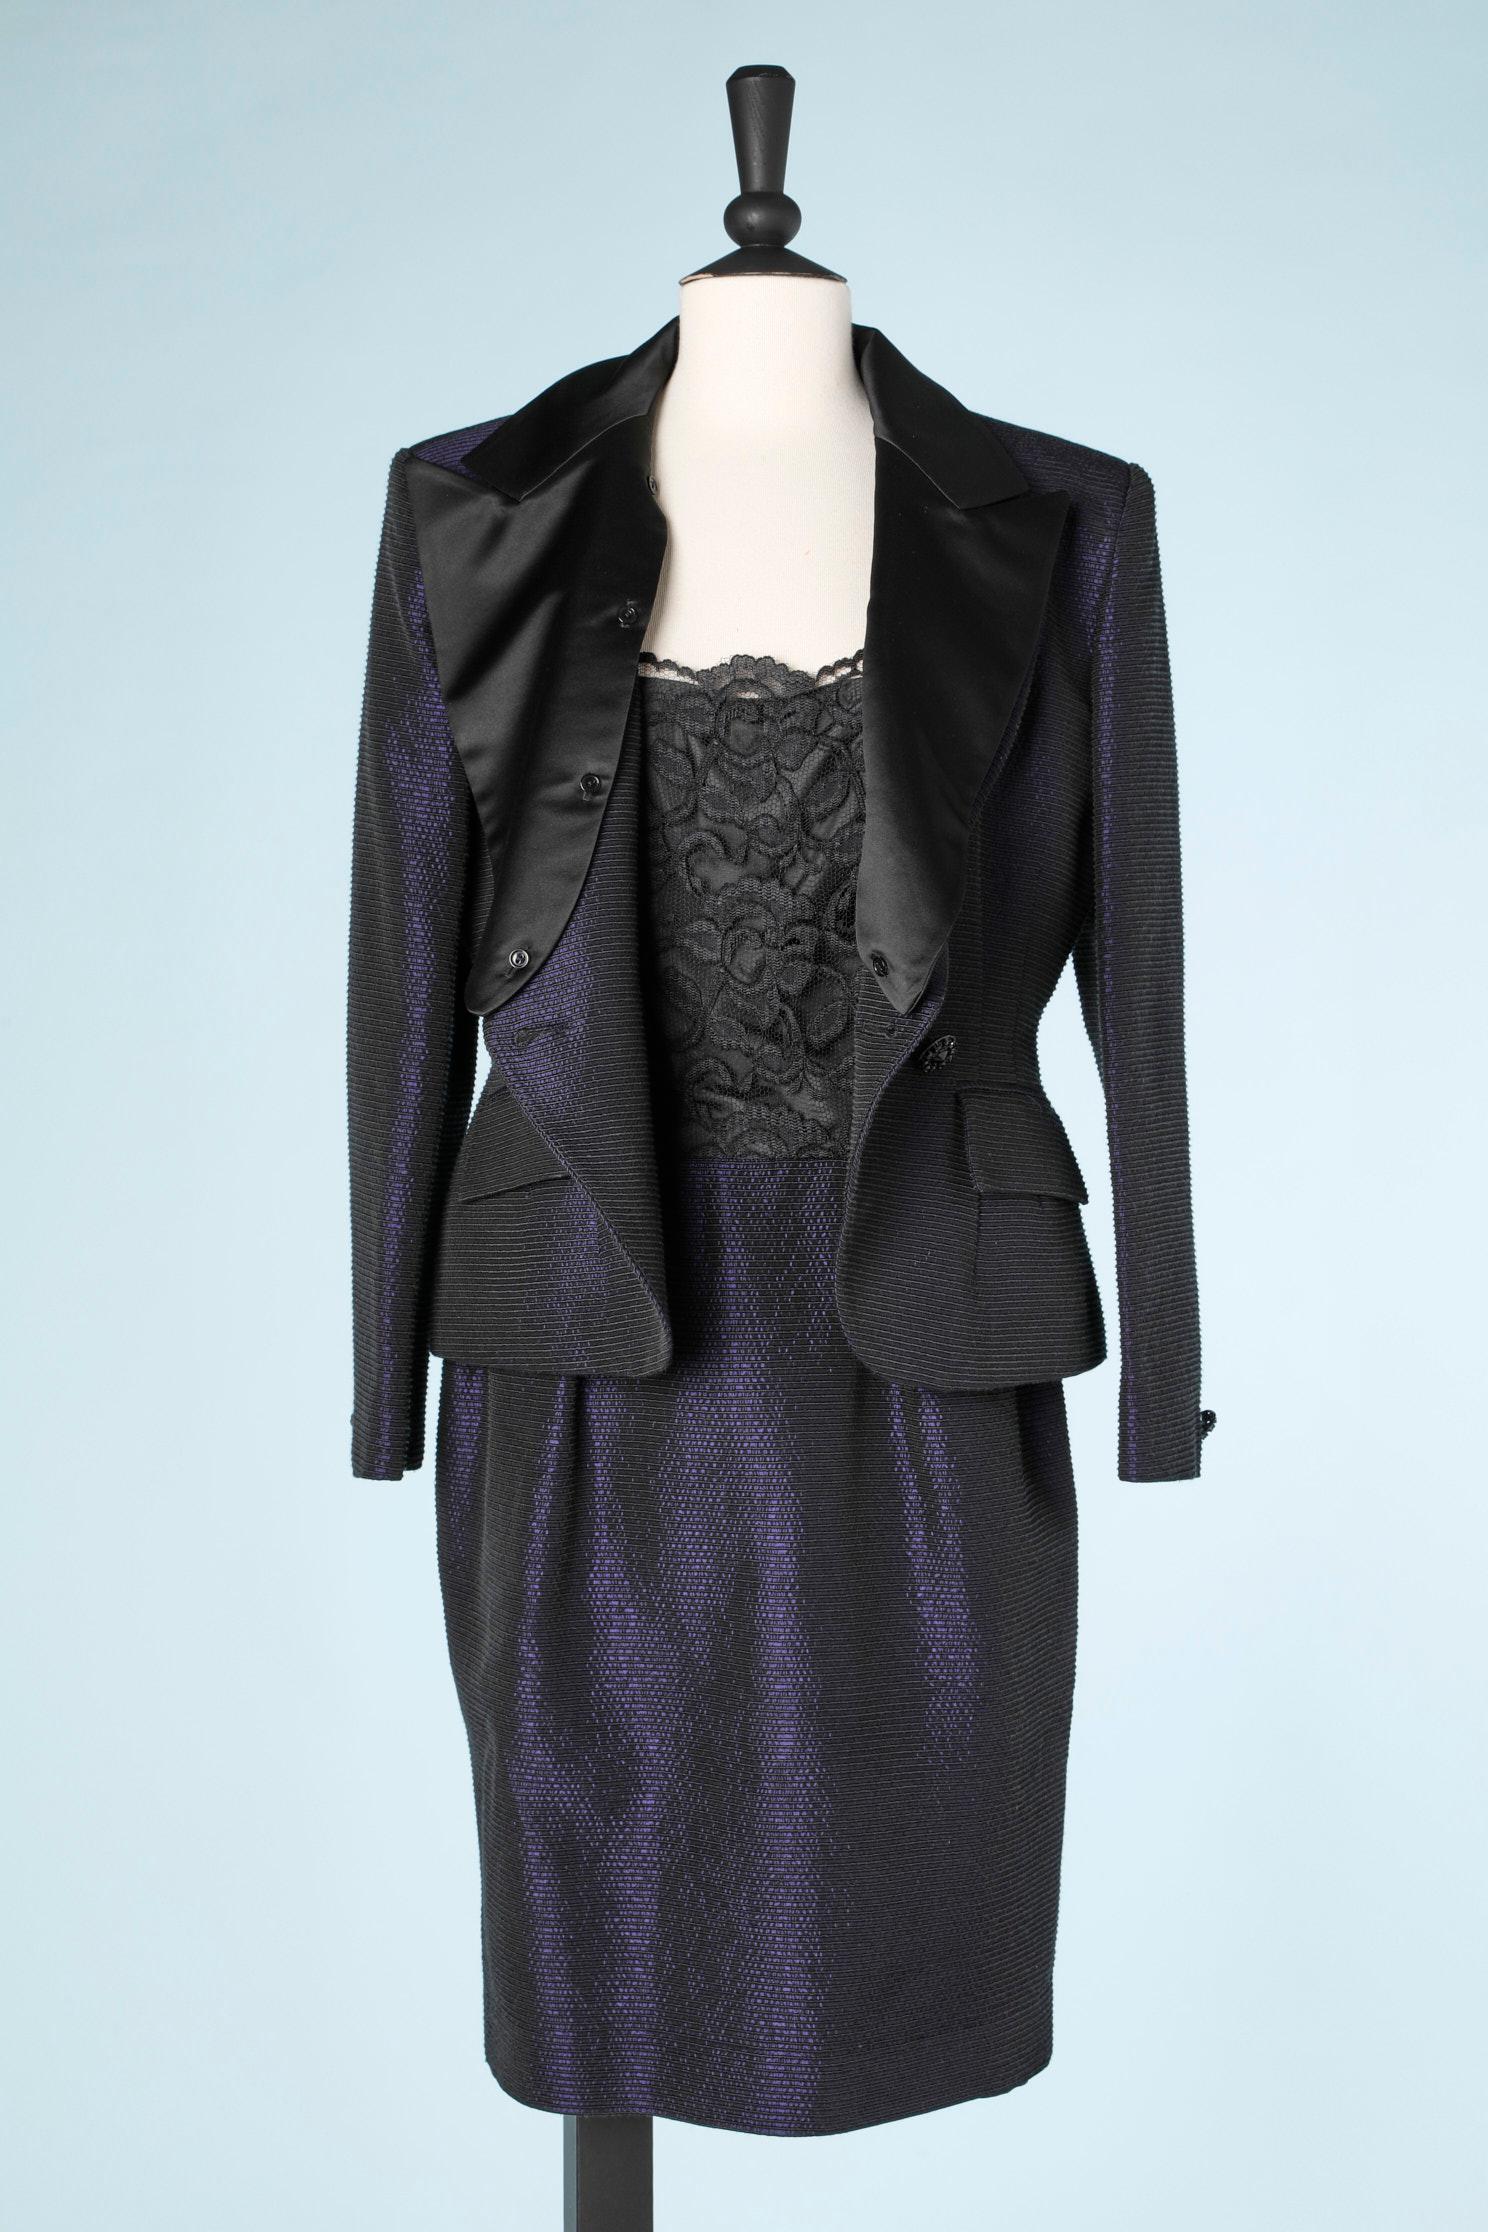 Women's Christian Dior purple and black cocktail dress- suit 